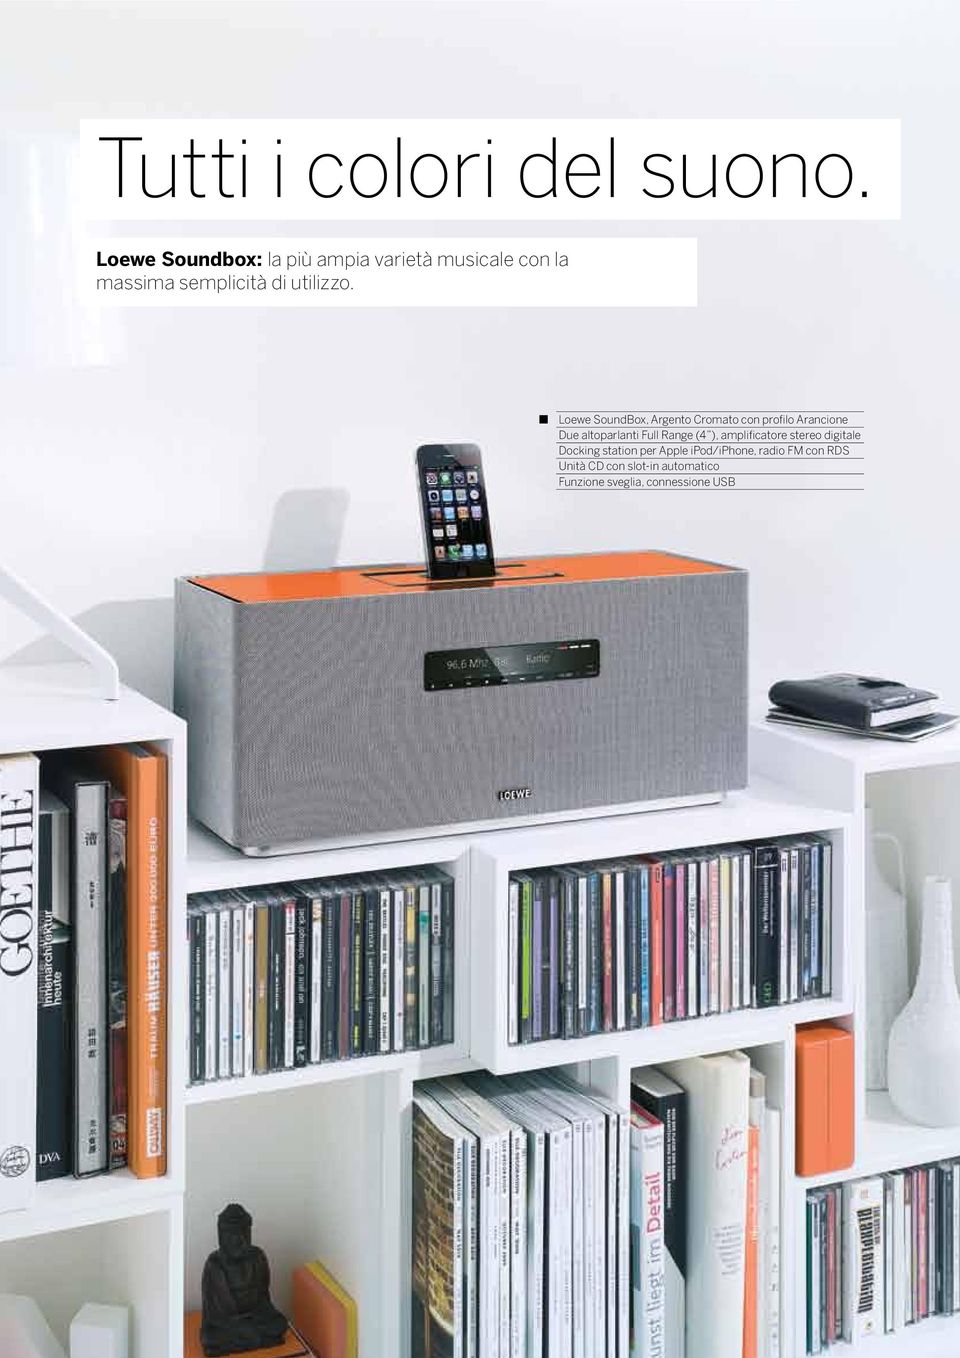 Loewe SoundBox, Argento Cromato con proflo Arancone Due altoparlant Full Range